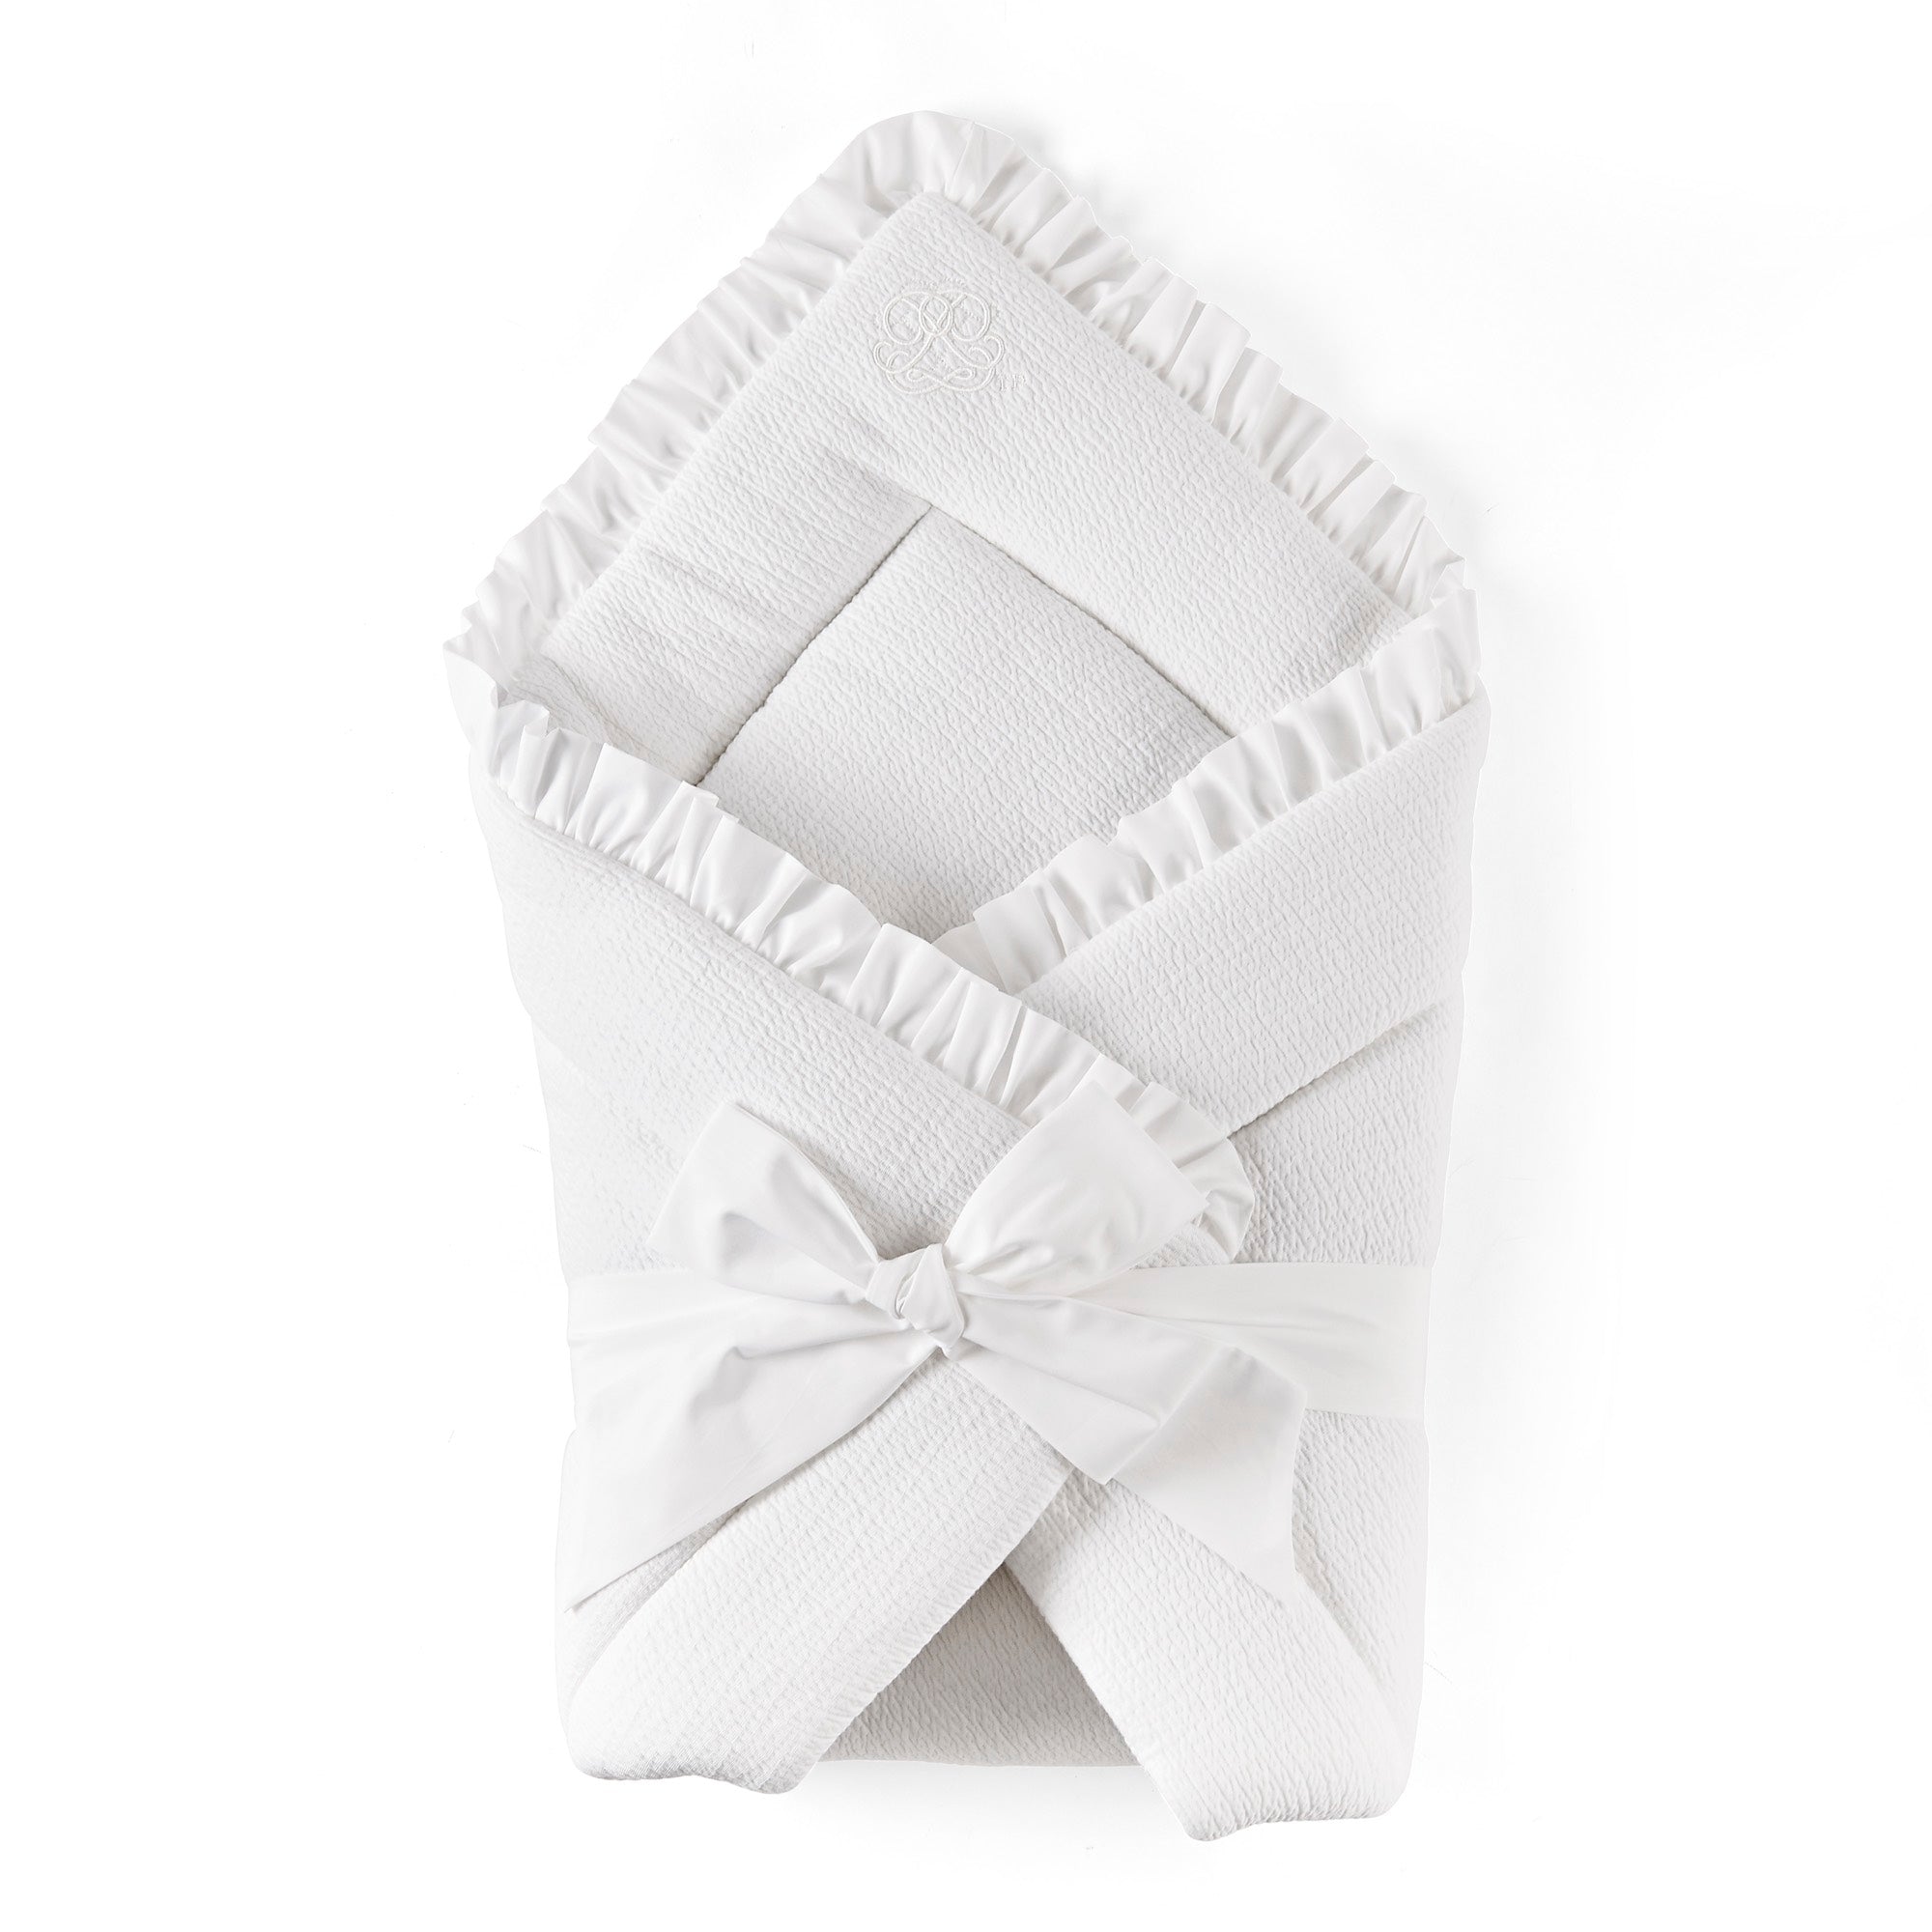 Theophile & Patachou Angel's Nest Shawl Blanket - Cotton White